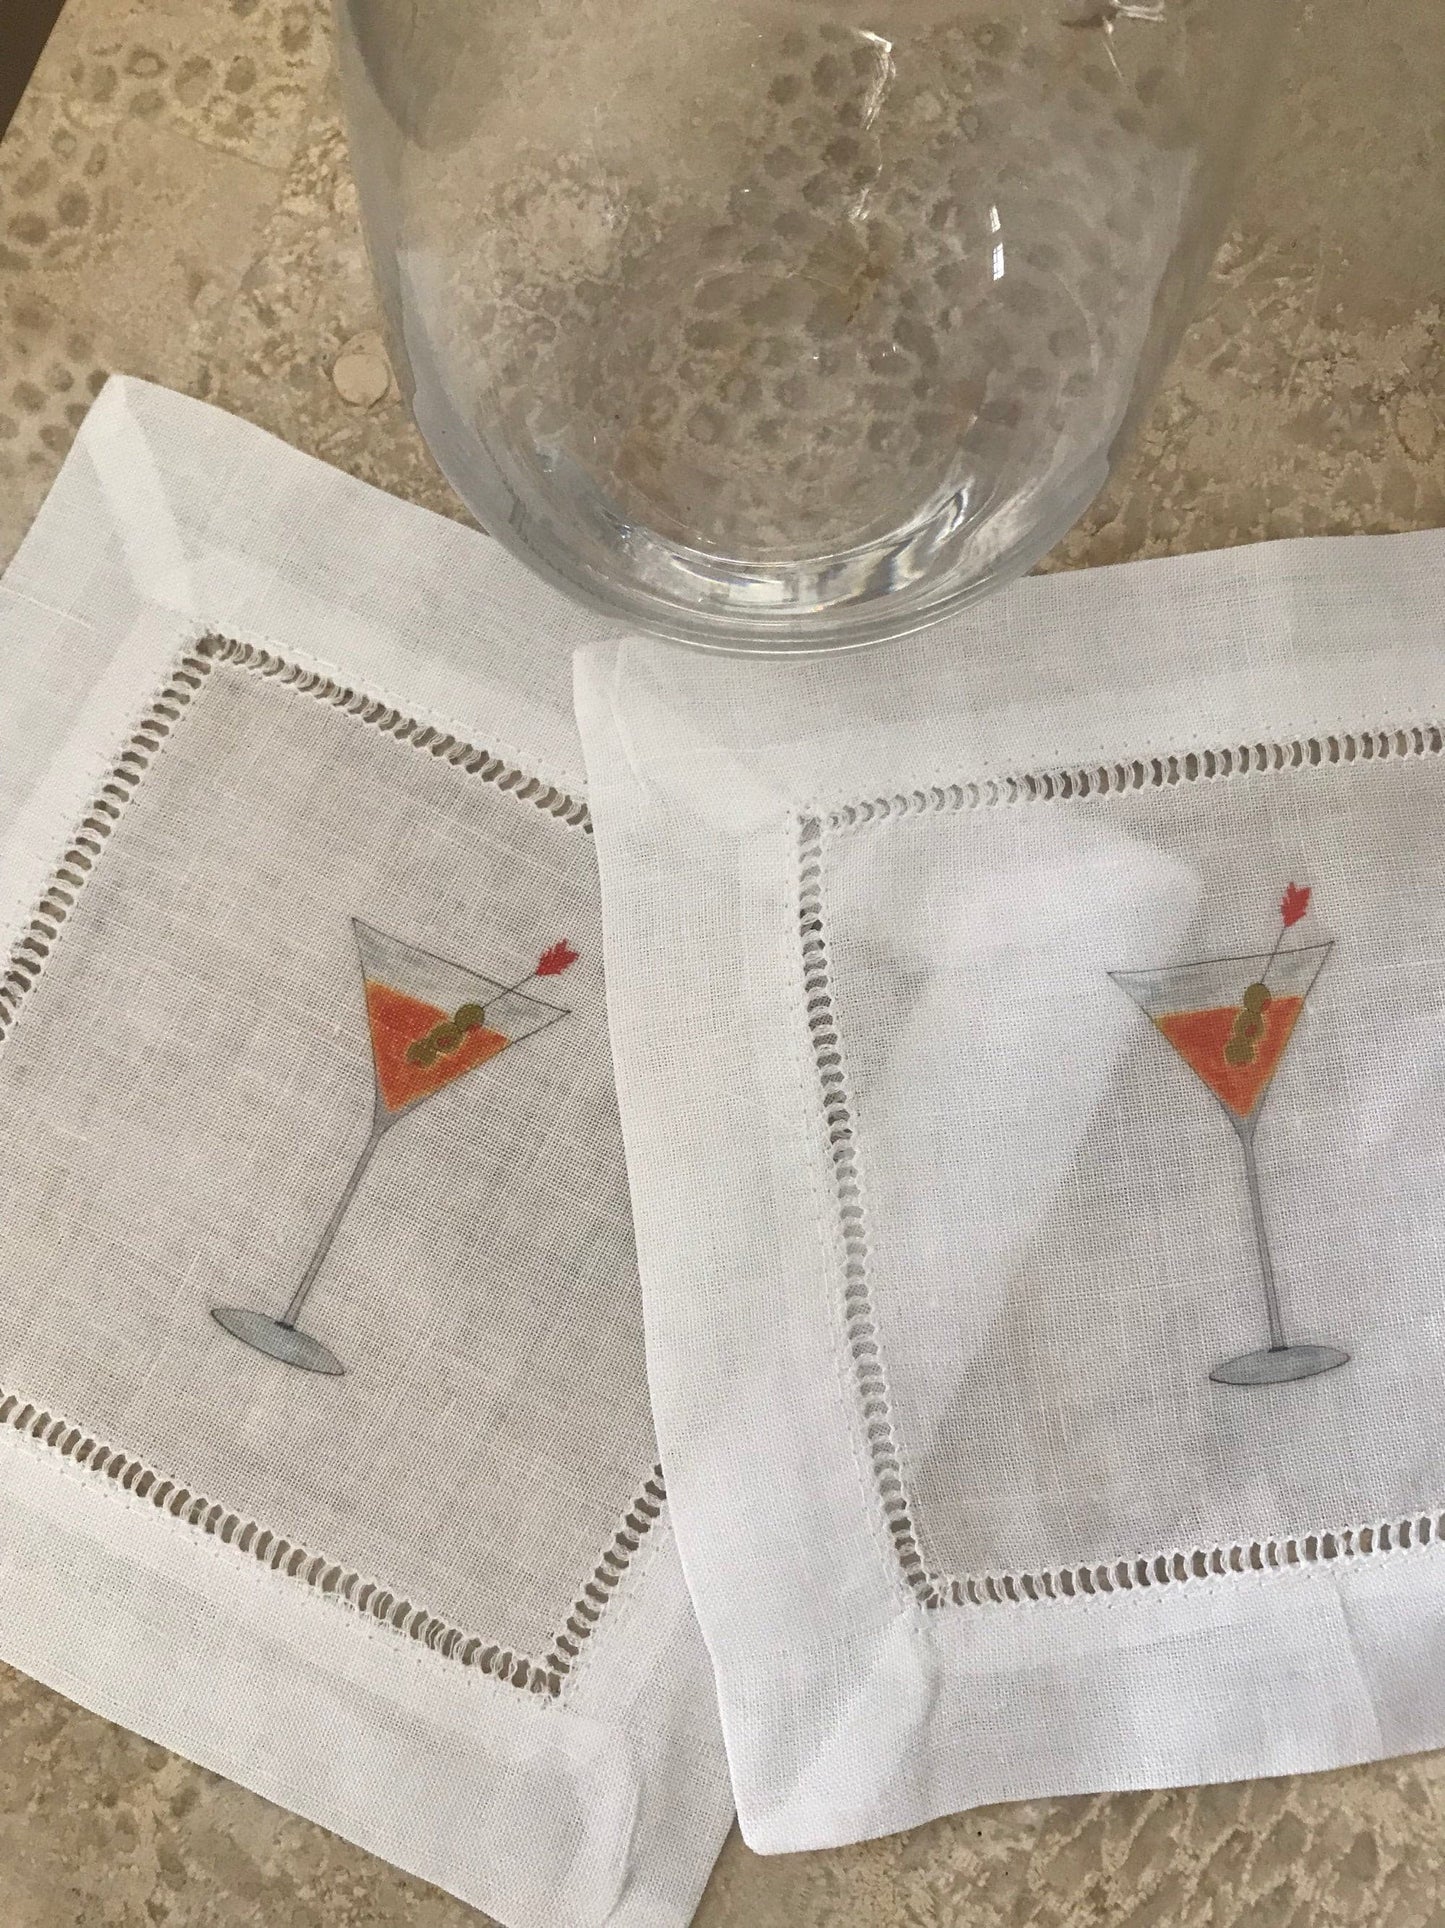 Martini Cocktail Coasters Napkins.